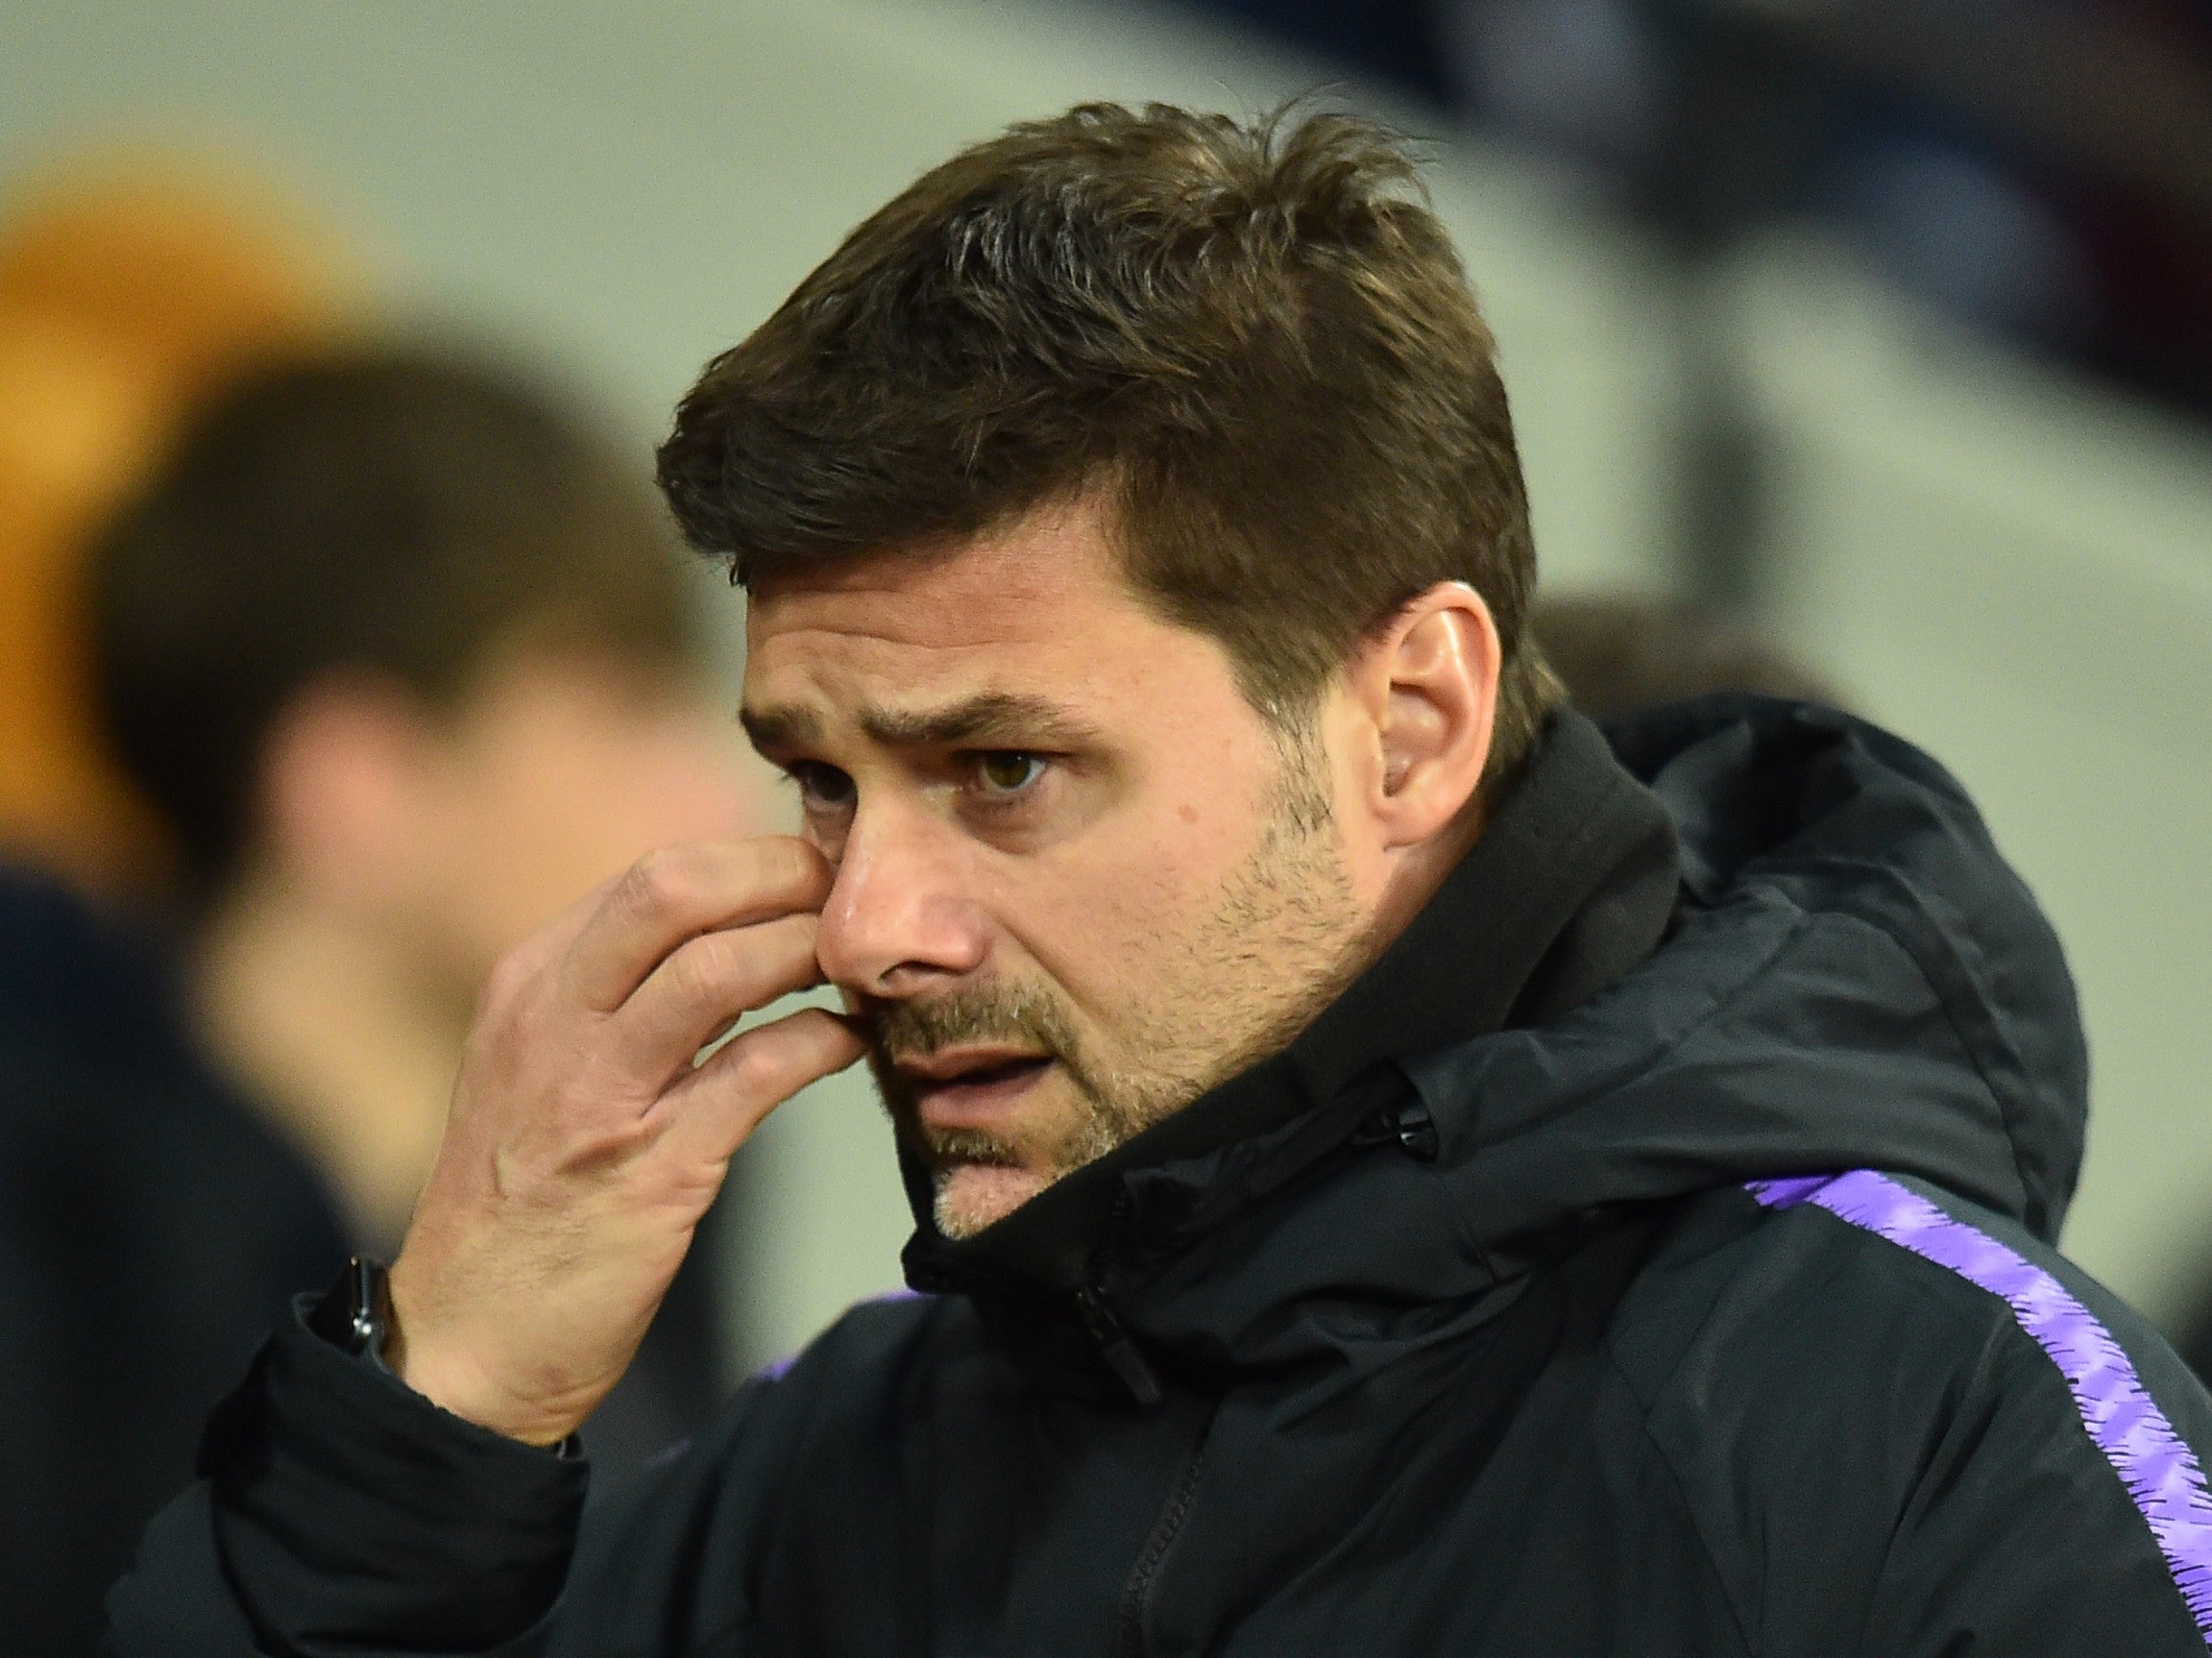 Debate has started over whether Tottenham are a successful club under Mauricio Pochettino